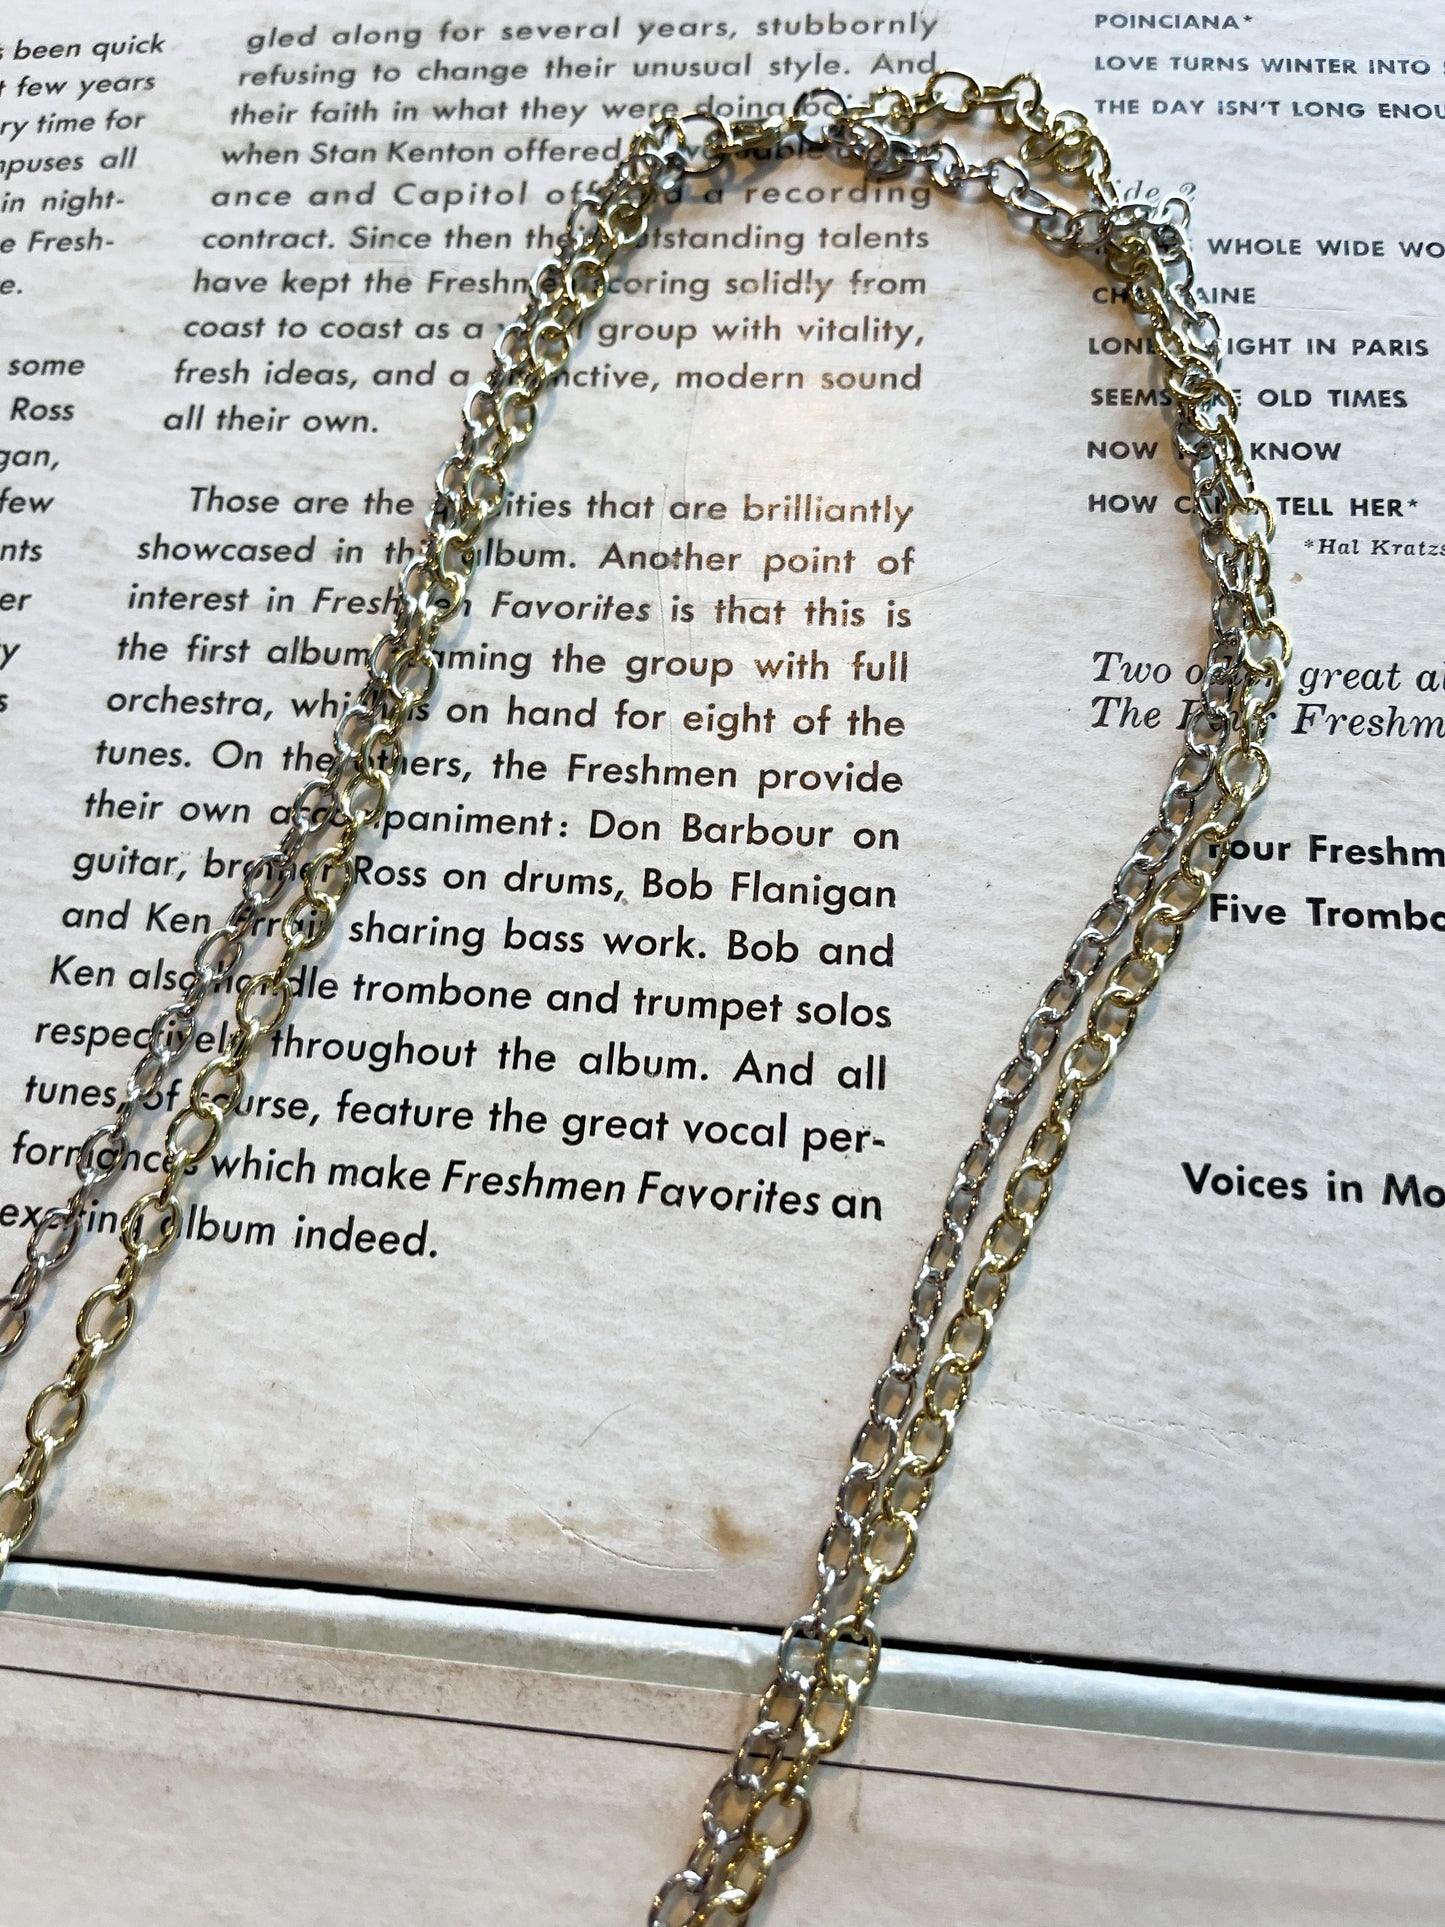 Gatekeeper Upcycled Vintage Key Chain Necklace